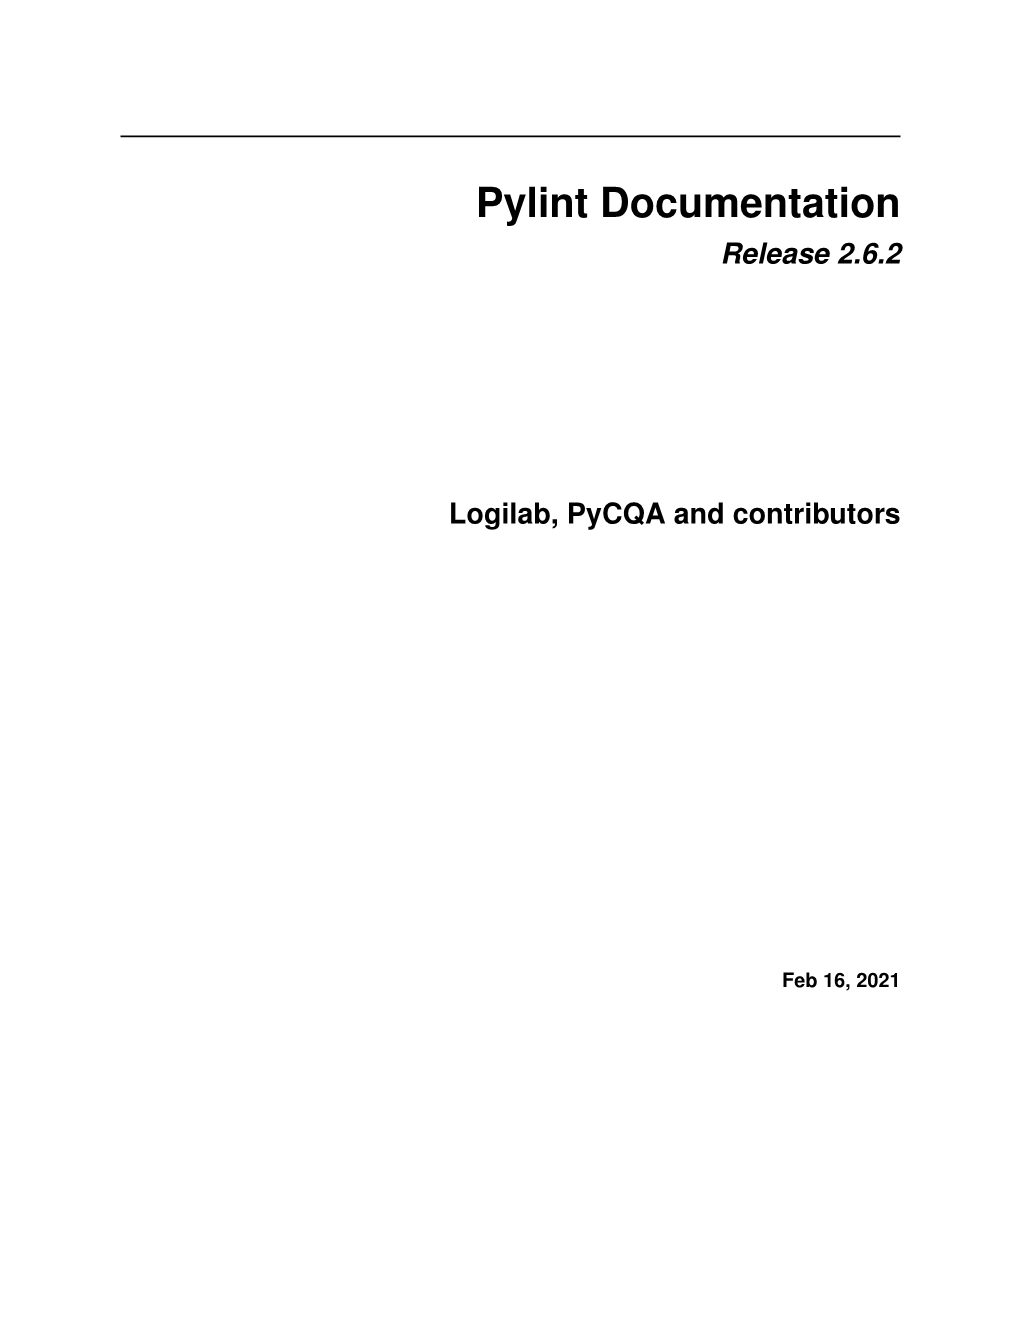 Pylint Documentation Release 2.6.2